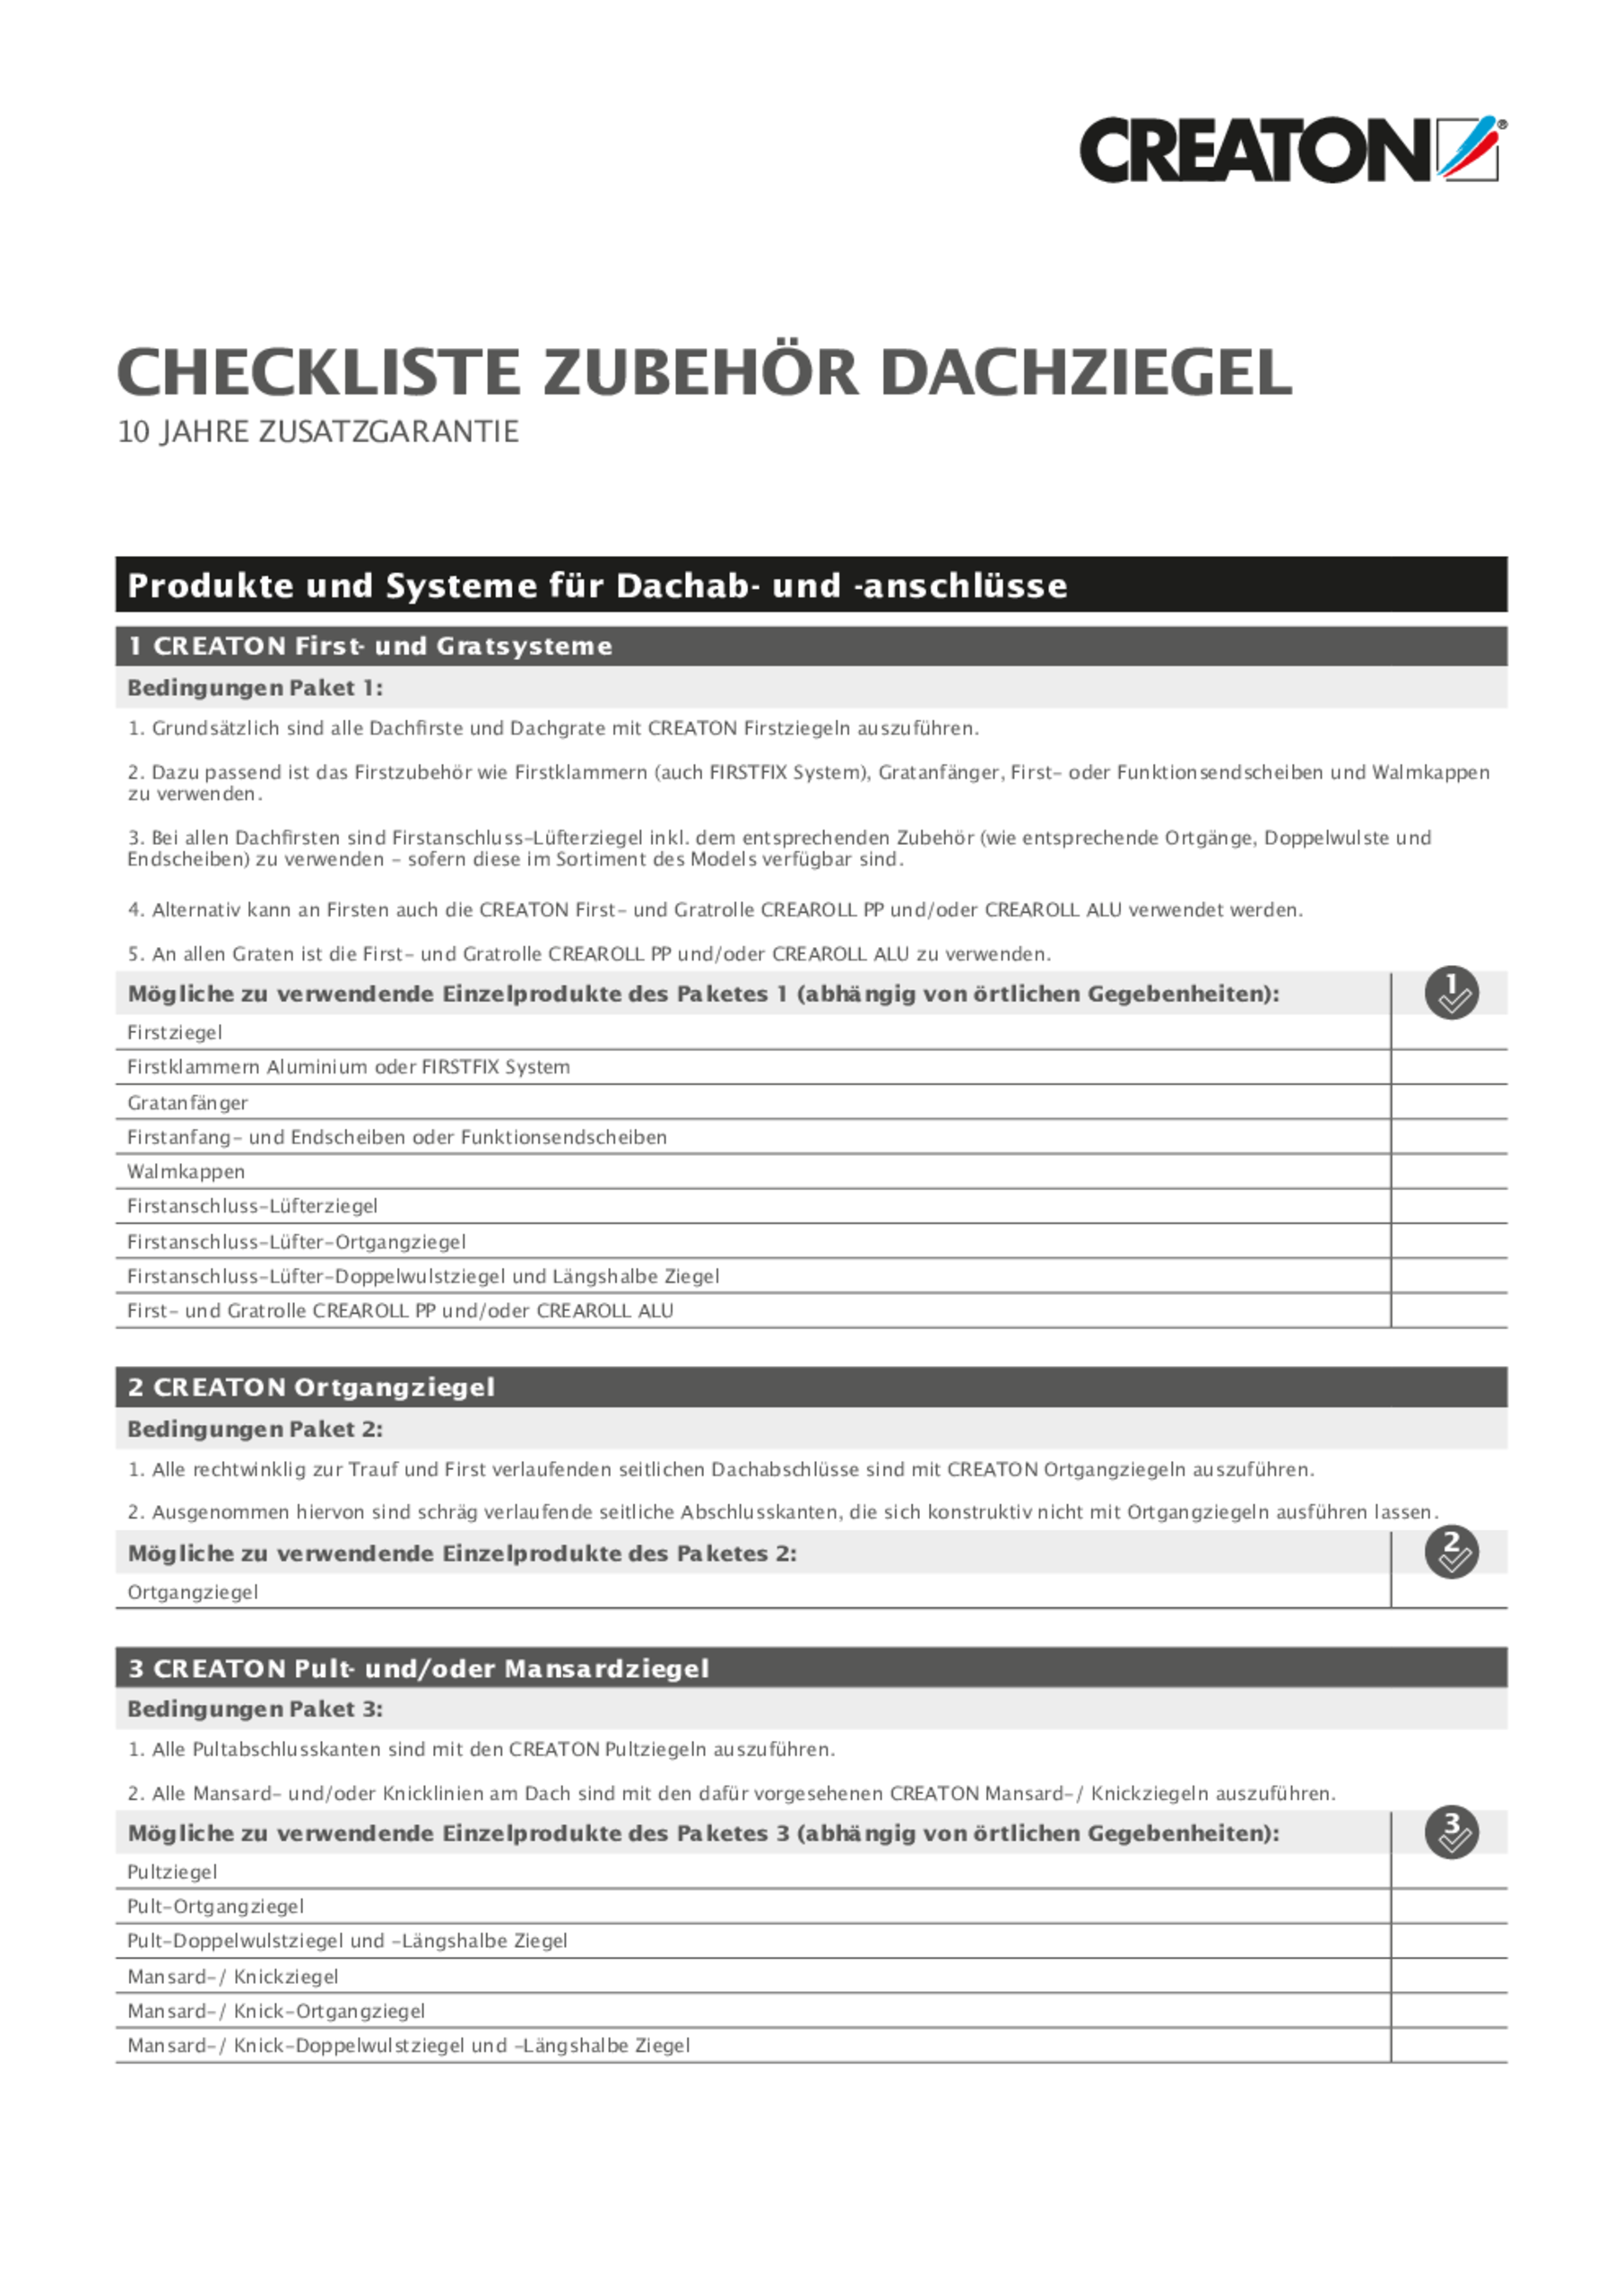 PRO_PROS_Checkliste-Zusatzgarantie-6aus10-TDZ-02-2021_#SALL_#AQU_#V1.pdf